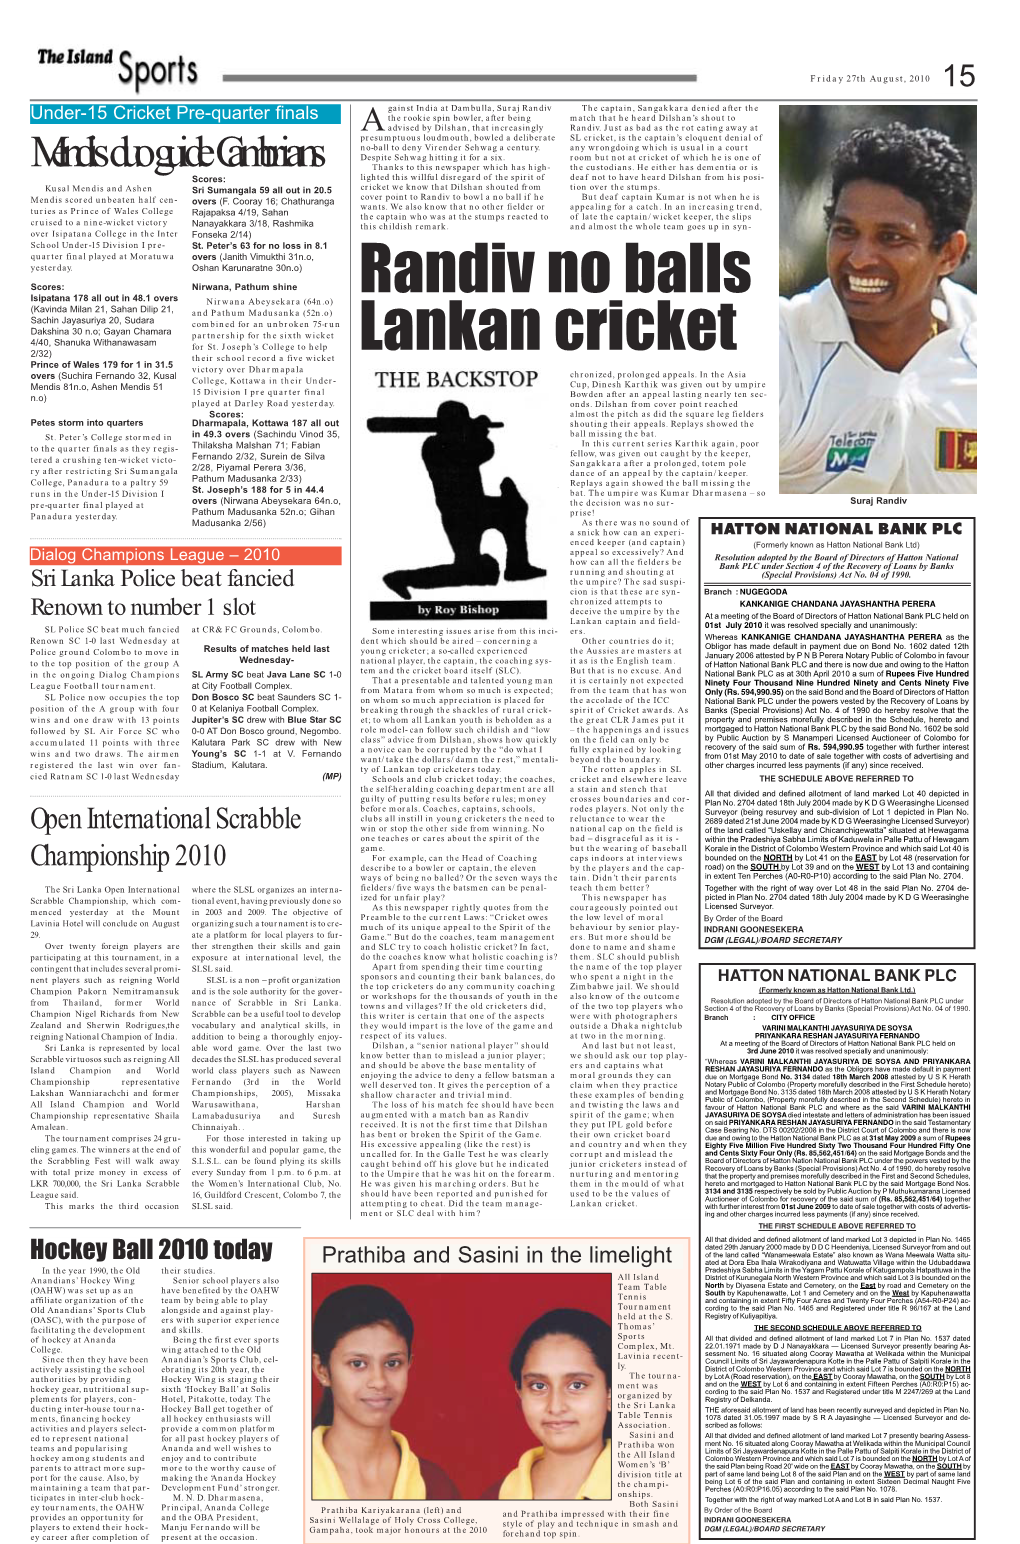 Randiv No Balls Lankan Cricket